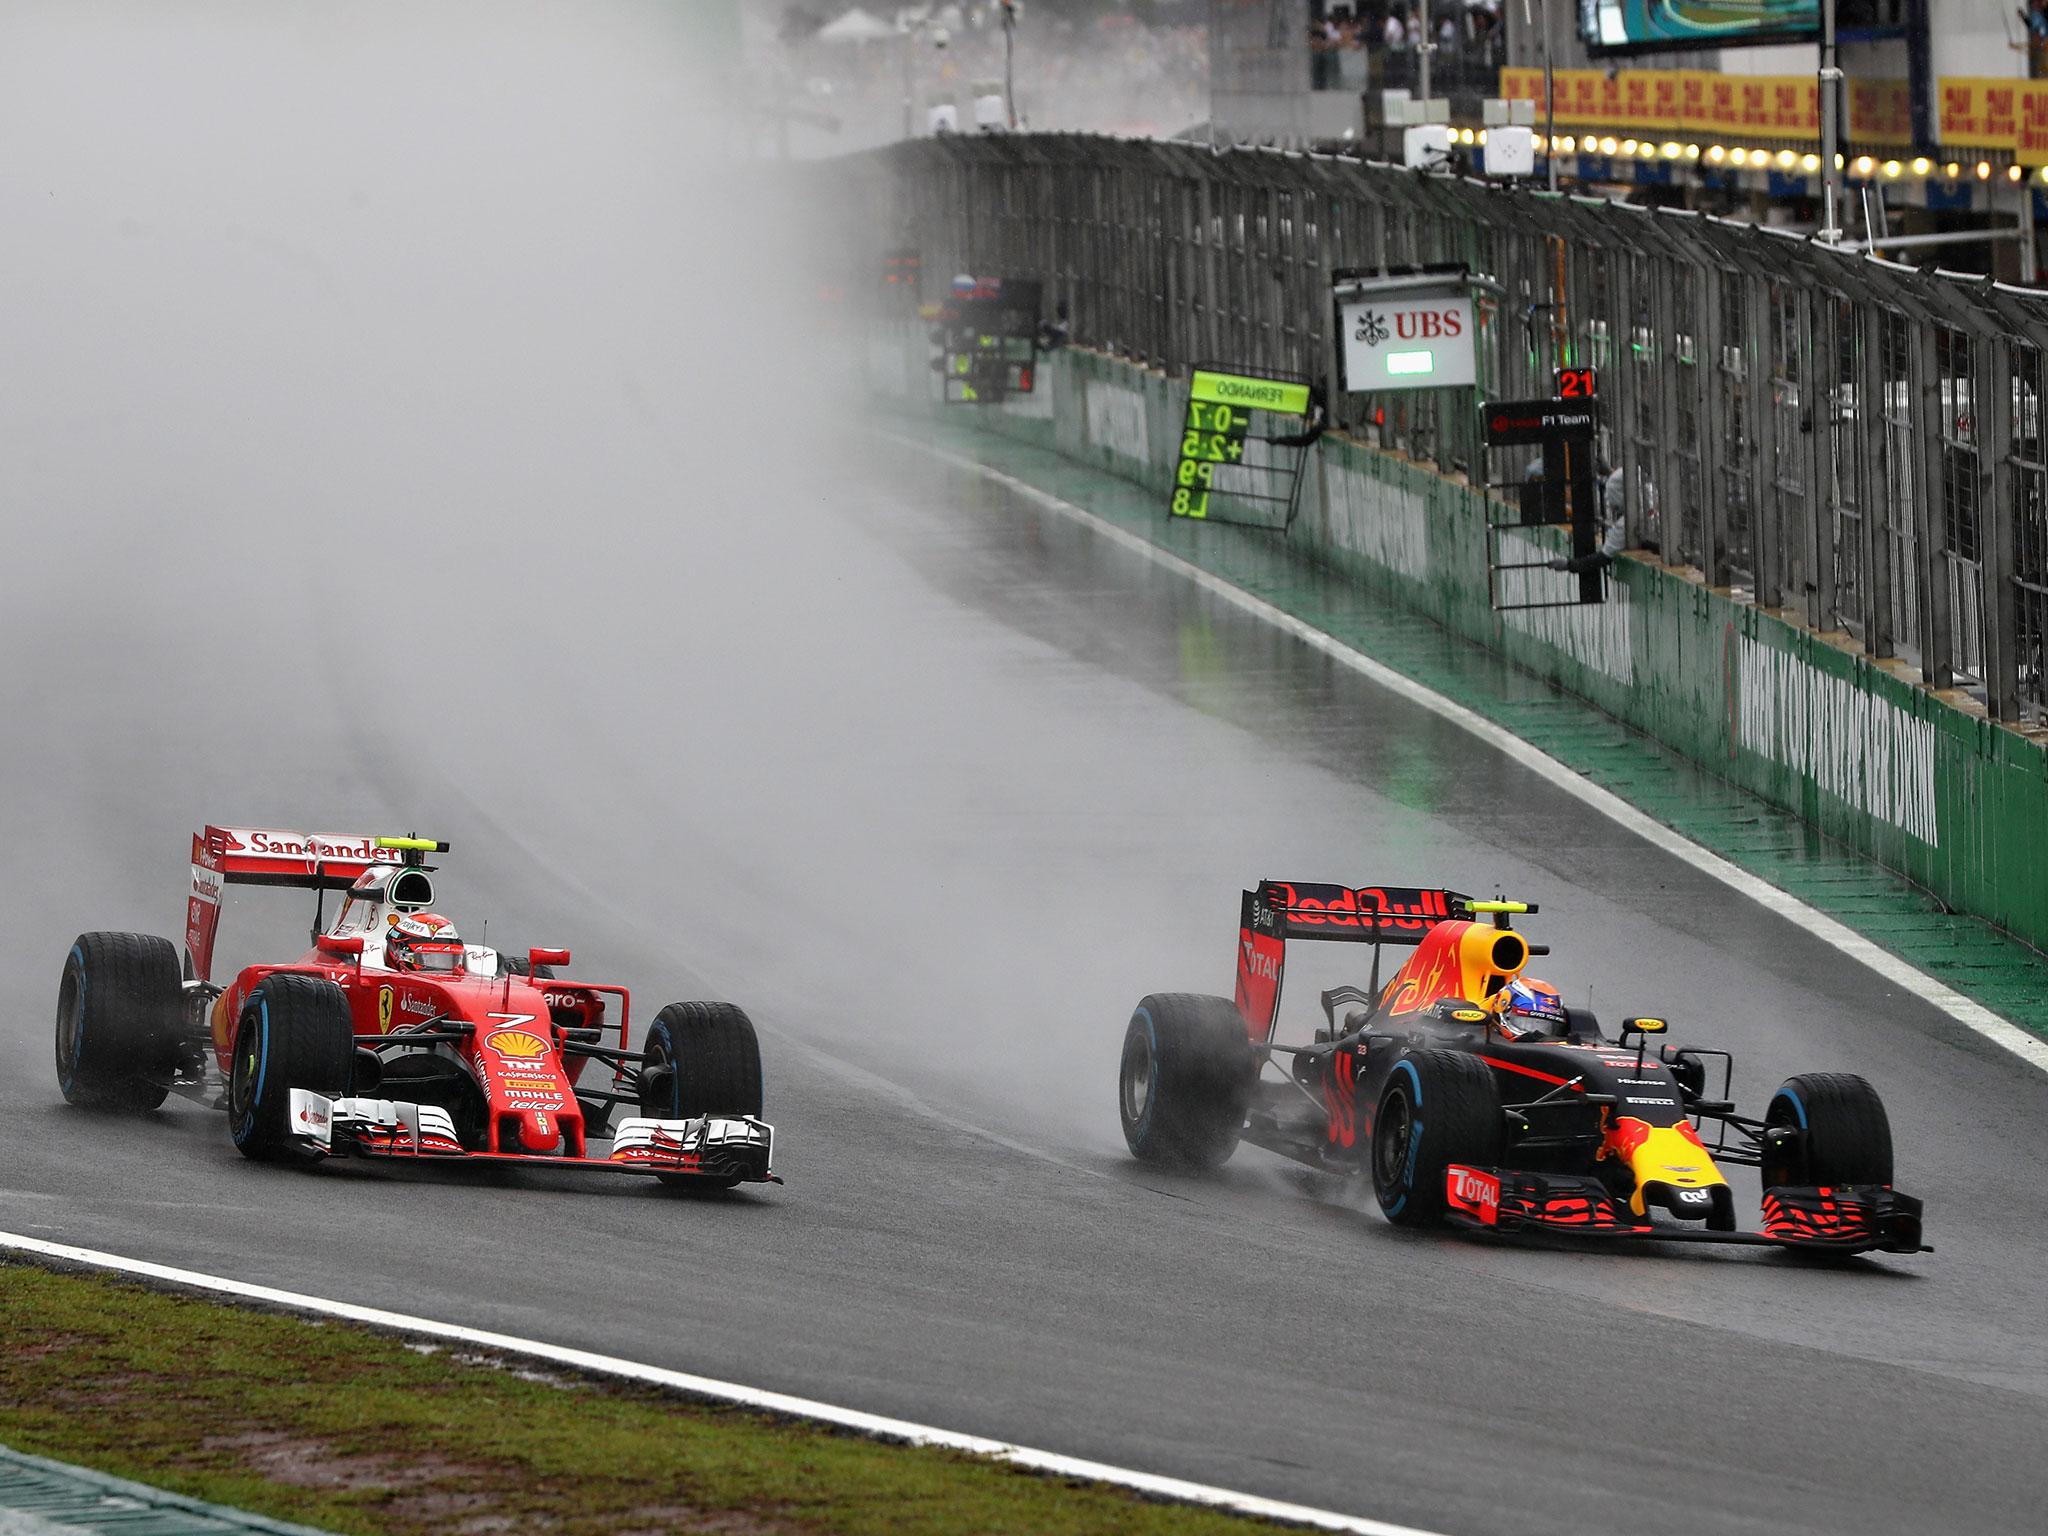 Max Verstappen passes Kimi Raikkonen towards the start of the Grand Prix